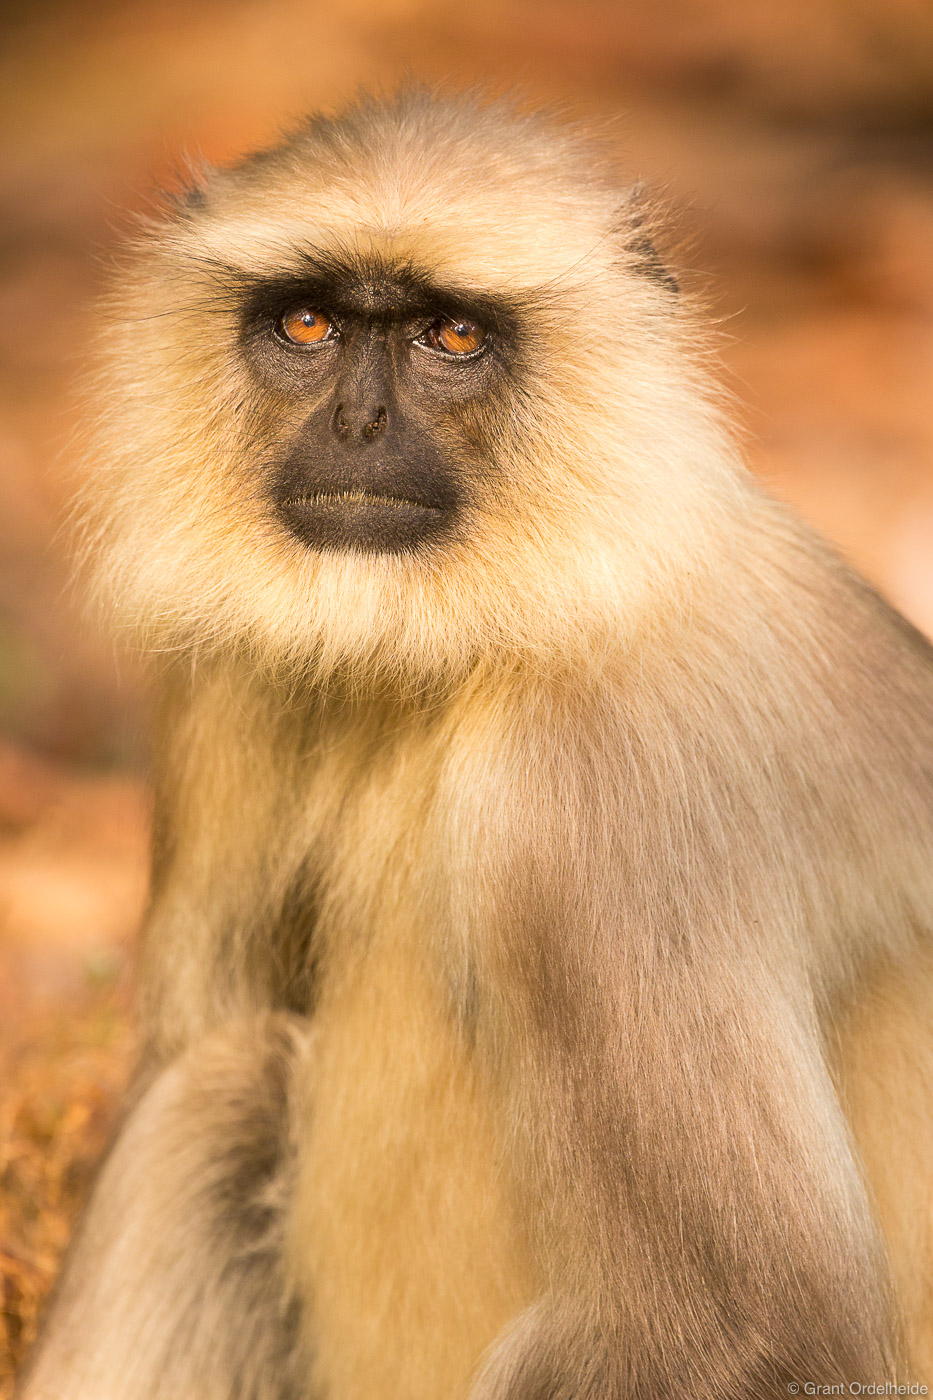 A portrait of a Langur Monkey in Bandhavgarh National Park.